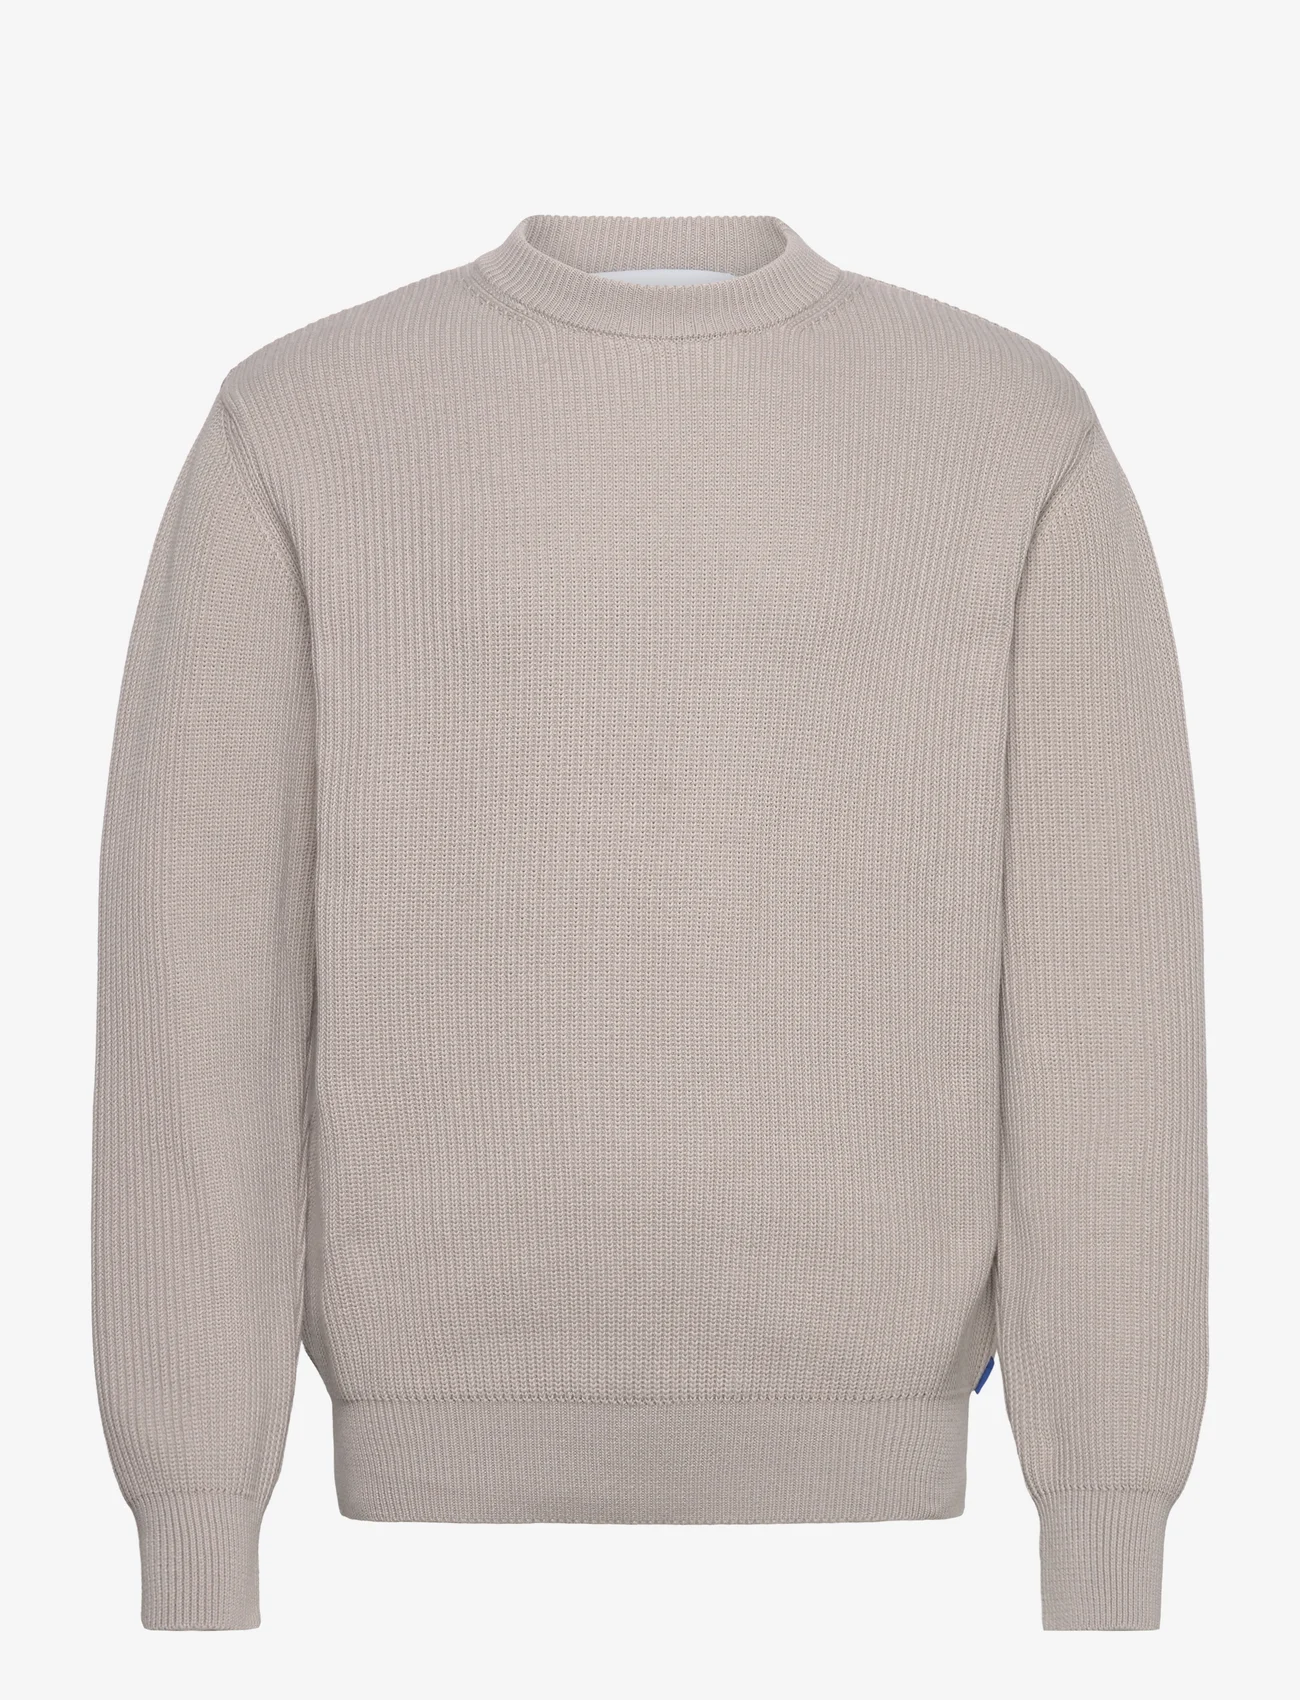 Garment Project - Round Neck Knit - Light Grey - truien met ronde hals - light grey - 0